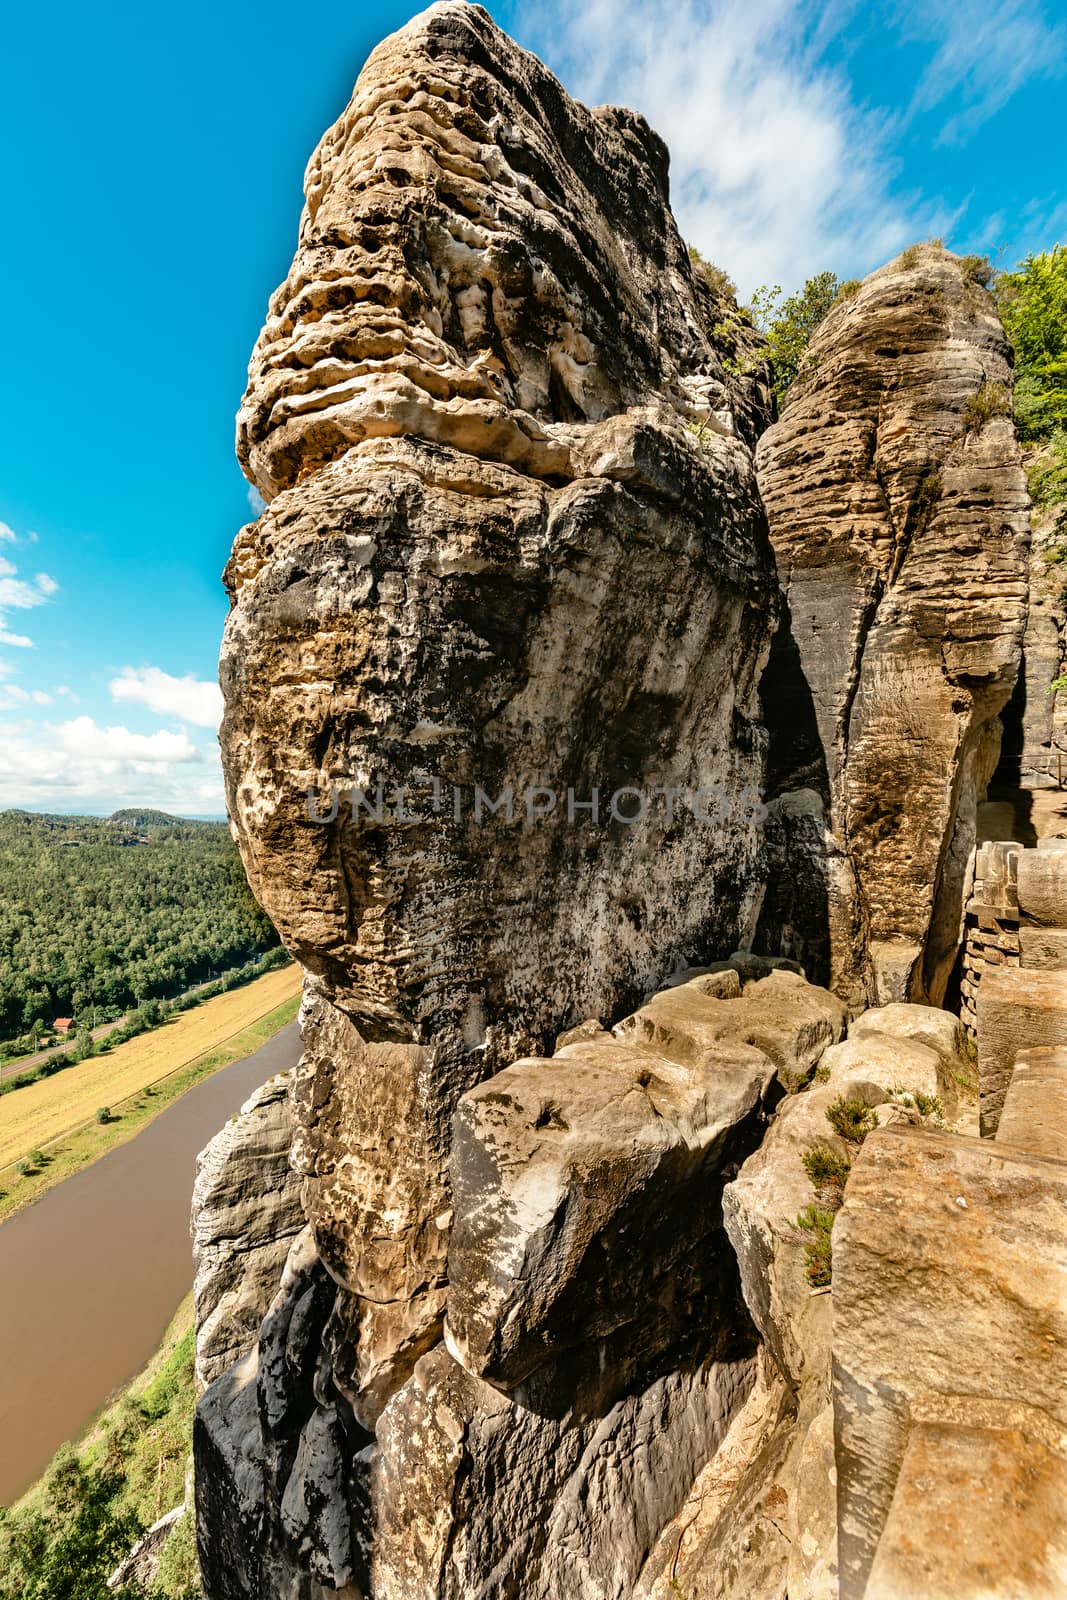 Bastei, head-shaped rocks, scenic view of the Bastei rock formation, known as Saxon Switzerland near Dresden, Saxony, Germany



